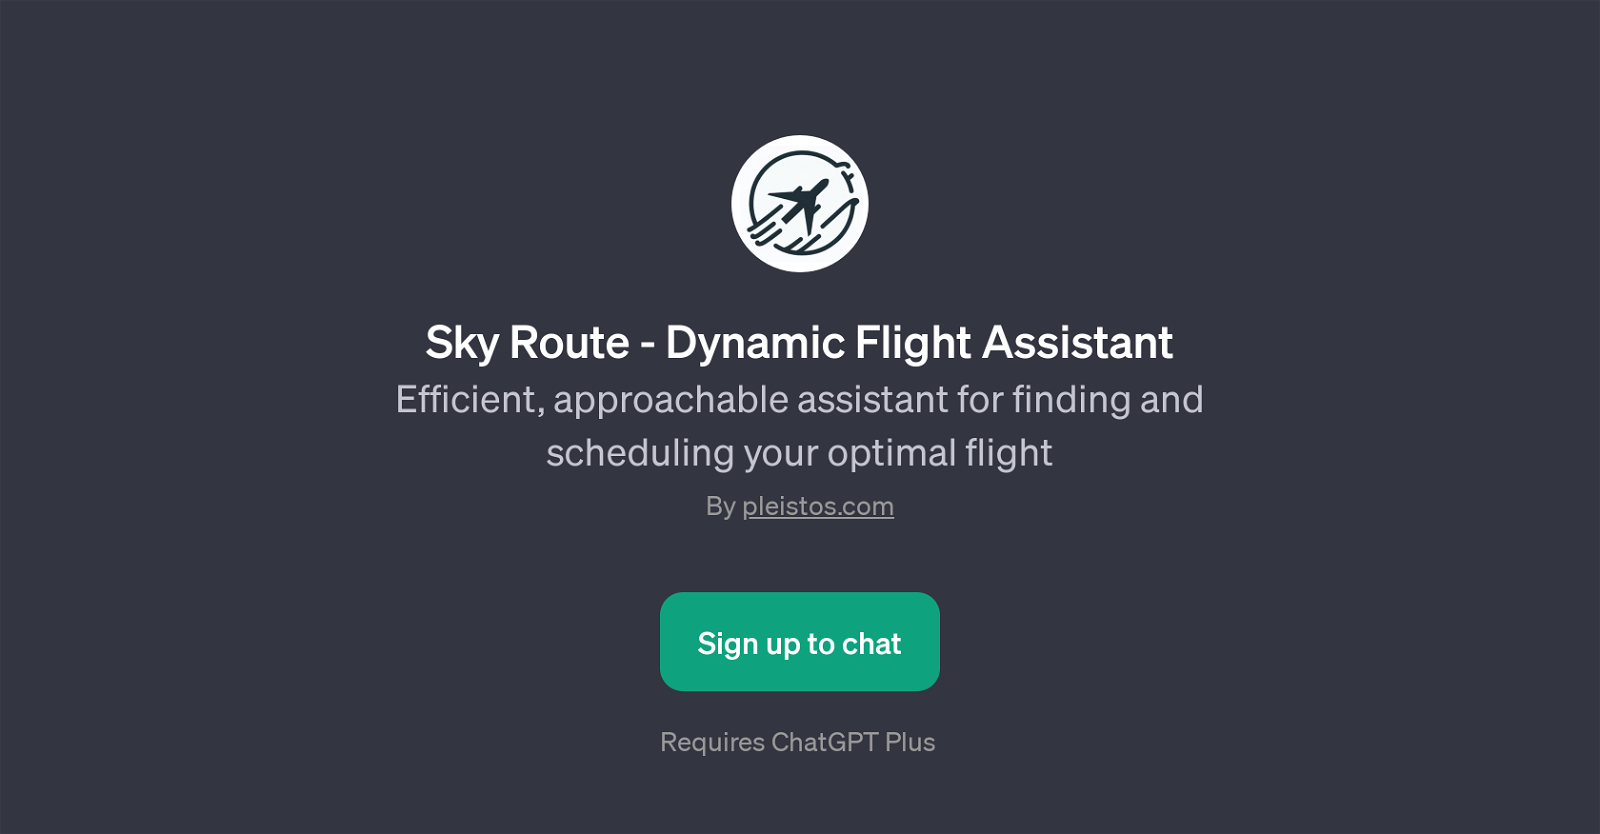 Sky Route - Dynamic Flight Assistant website